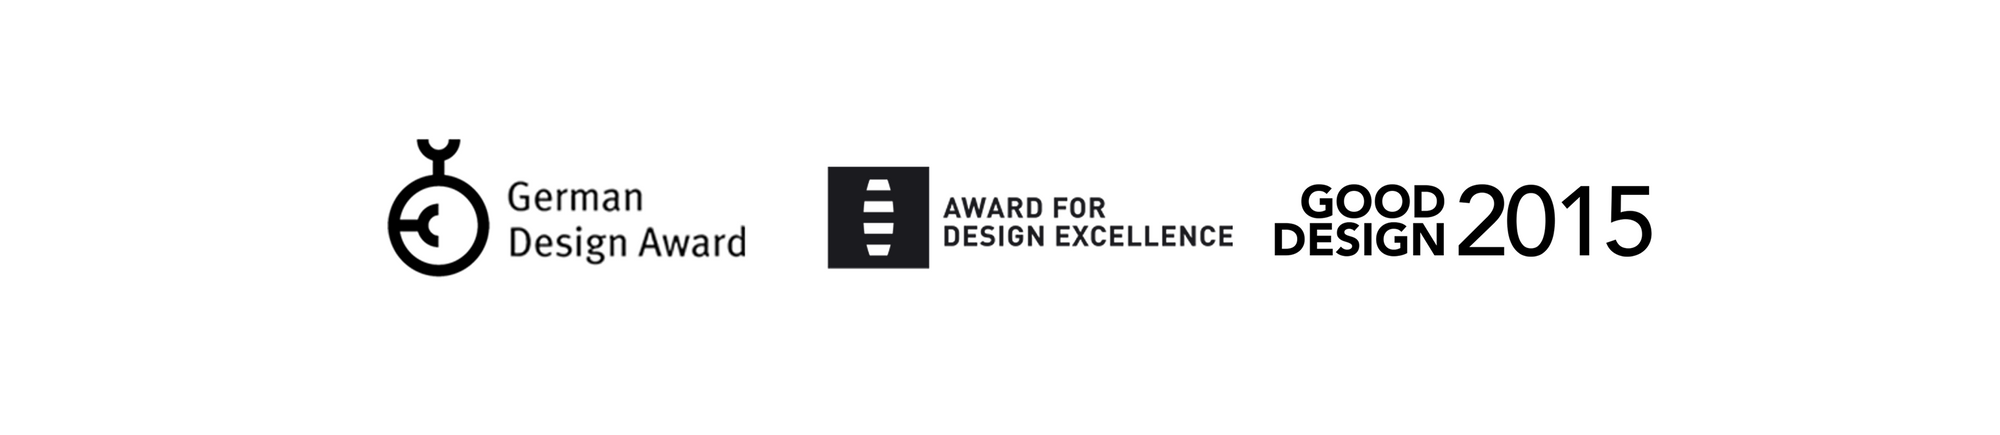 Subwing design awards banner